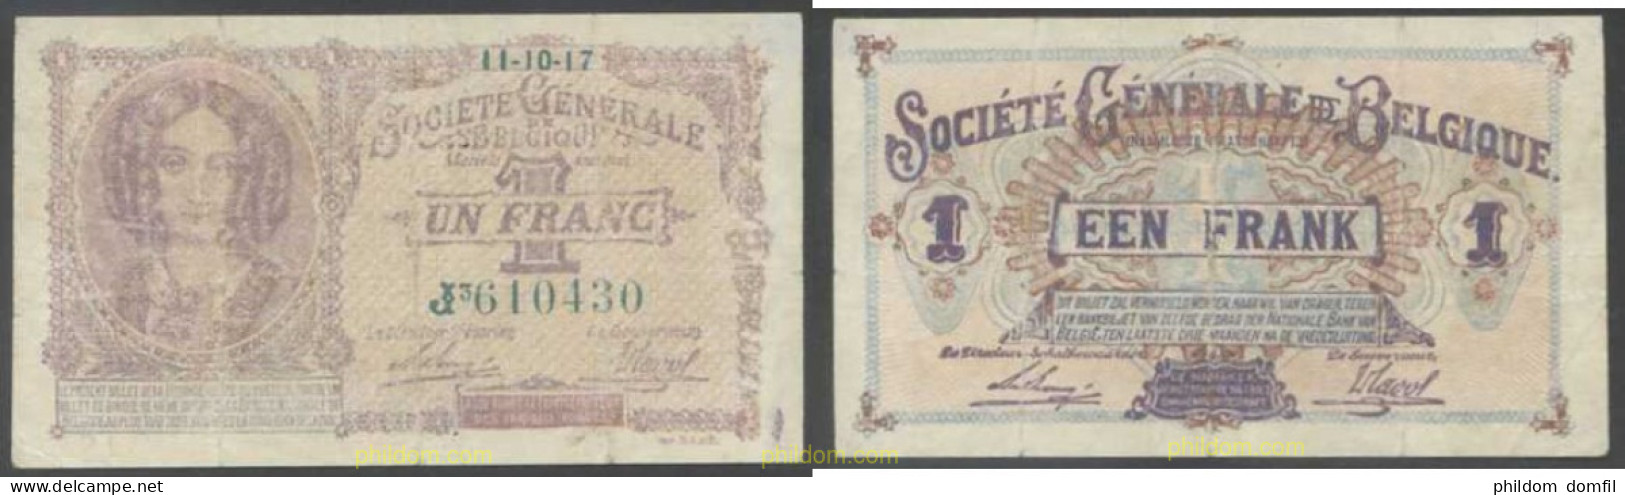 7882 BELGICA 1917 BELGIQUE 1 FRANC 1917 - Collezioni